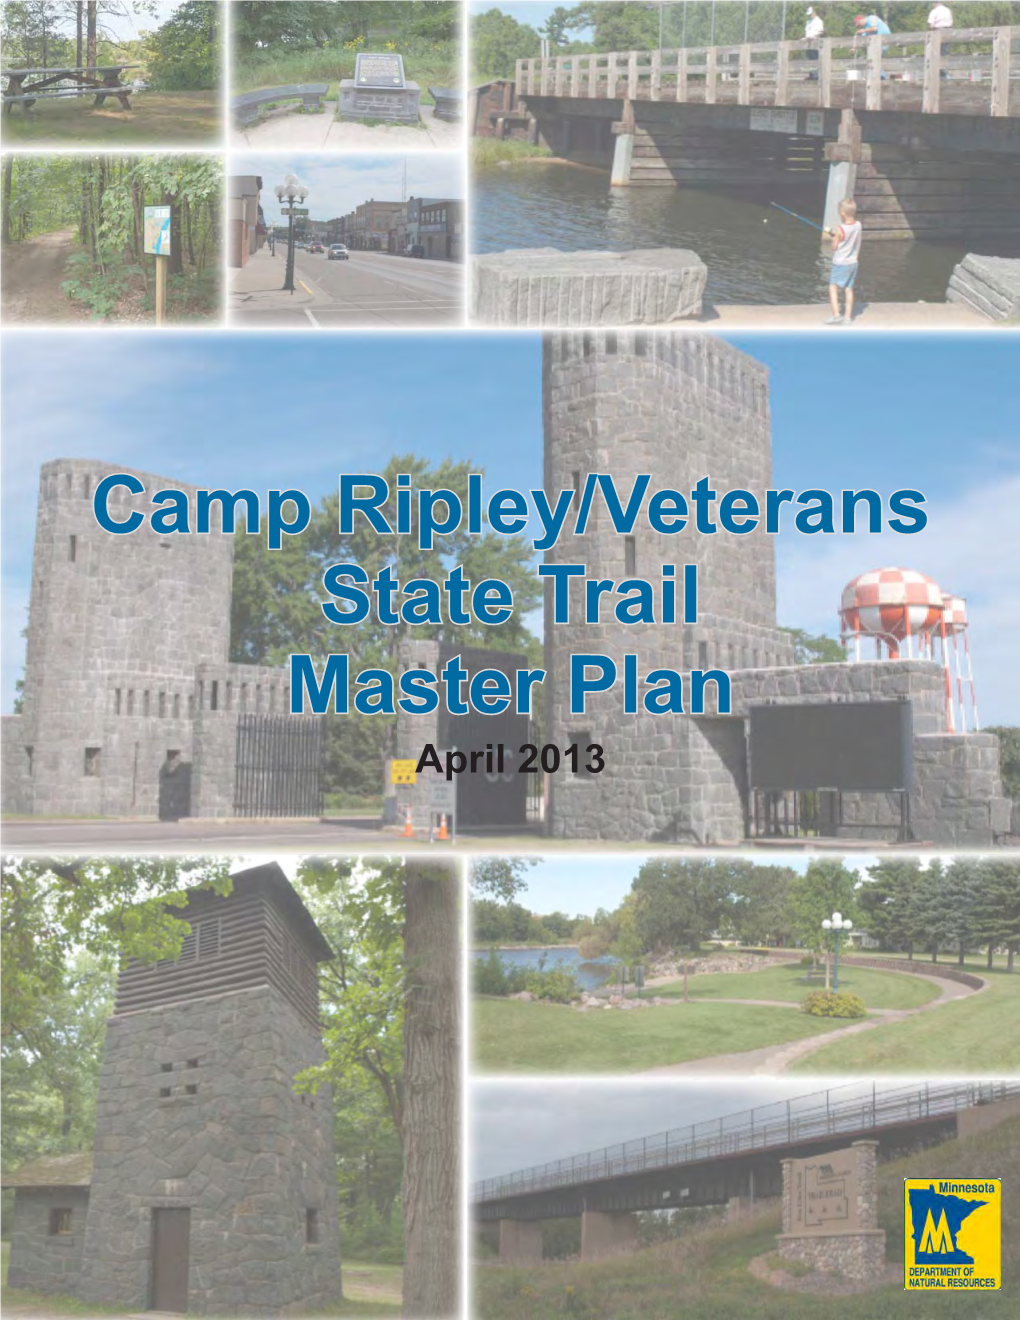 Camp Ripley/Veterans State Trail Master Plan April 2013